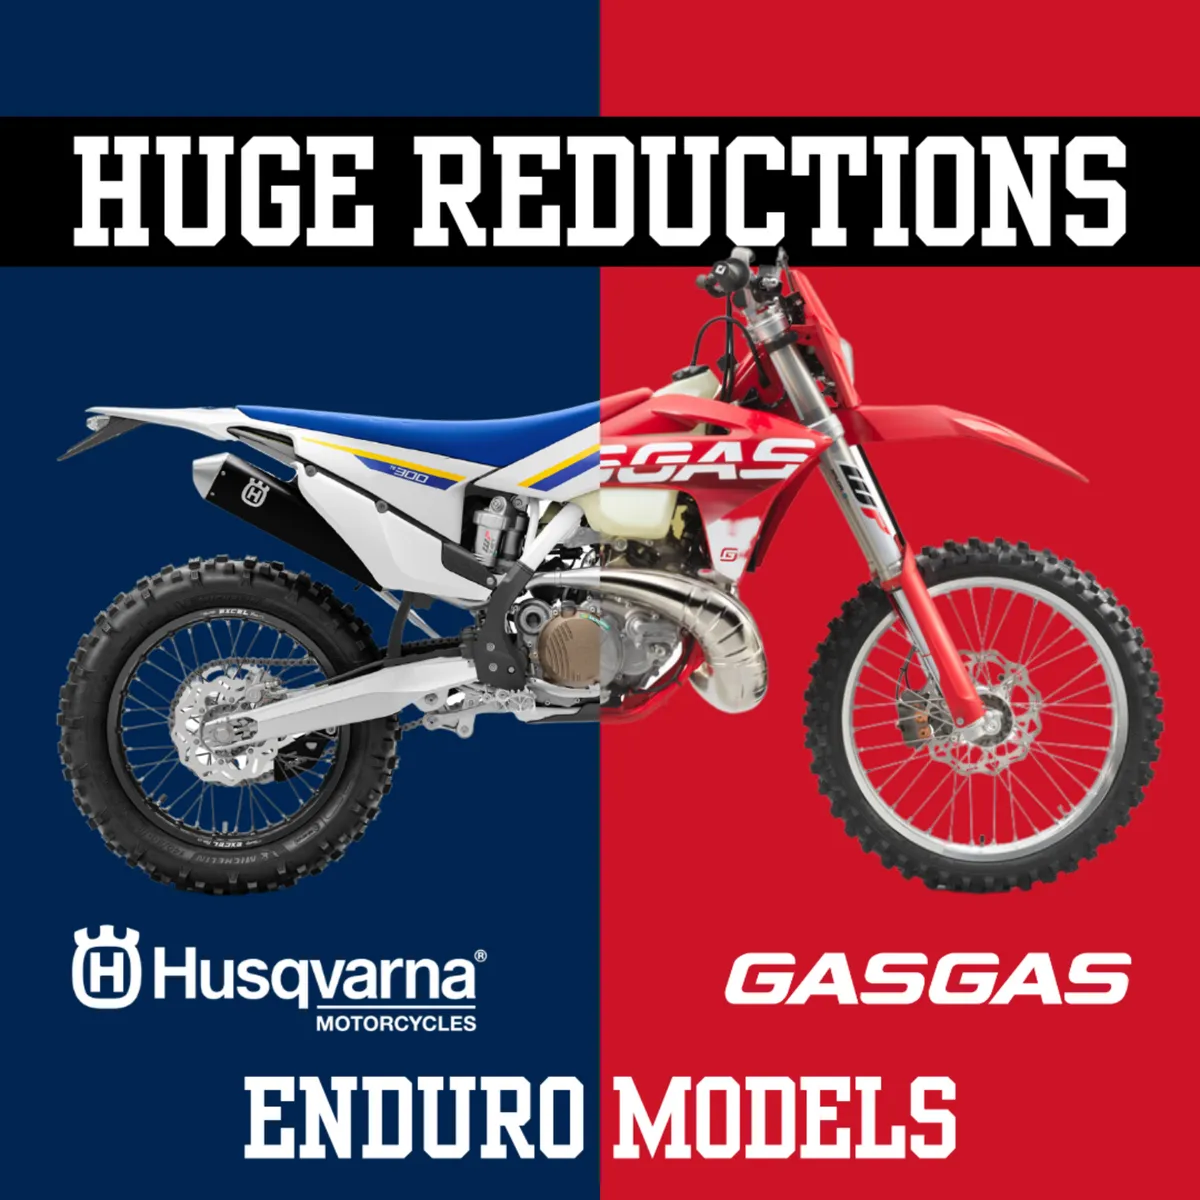 Husqvarna and GasGas Enduro bikes - Special Offer - Image 1